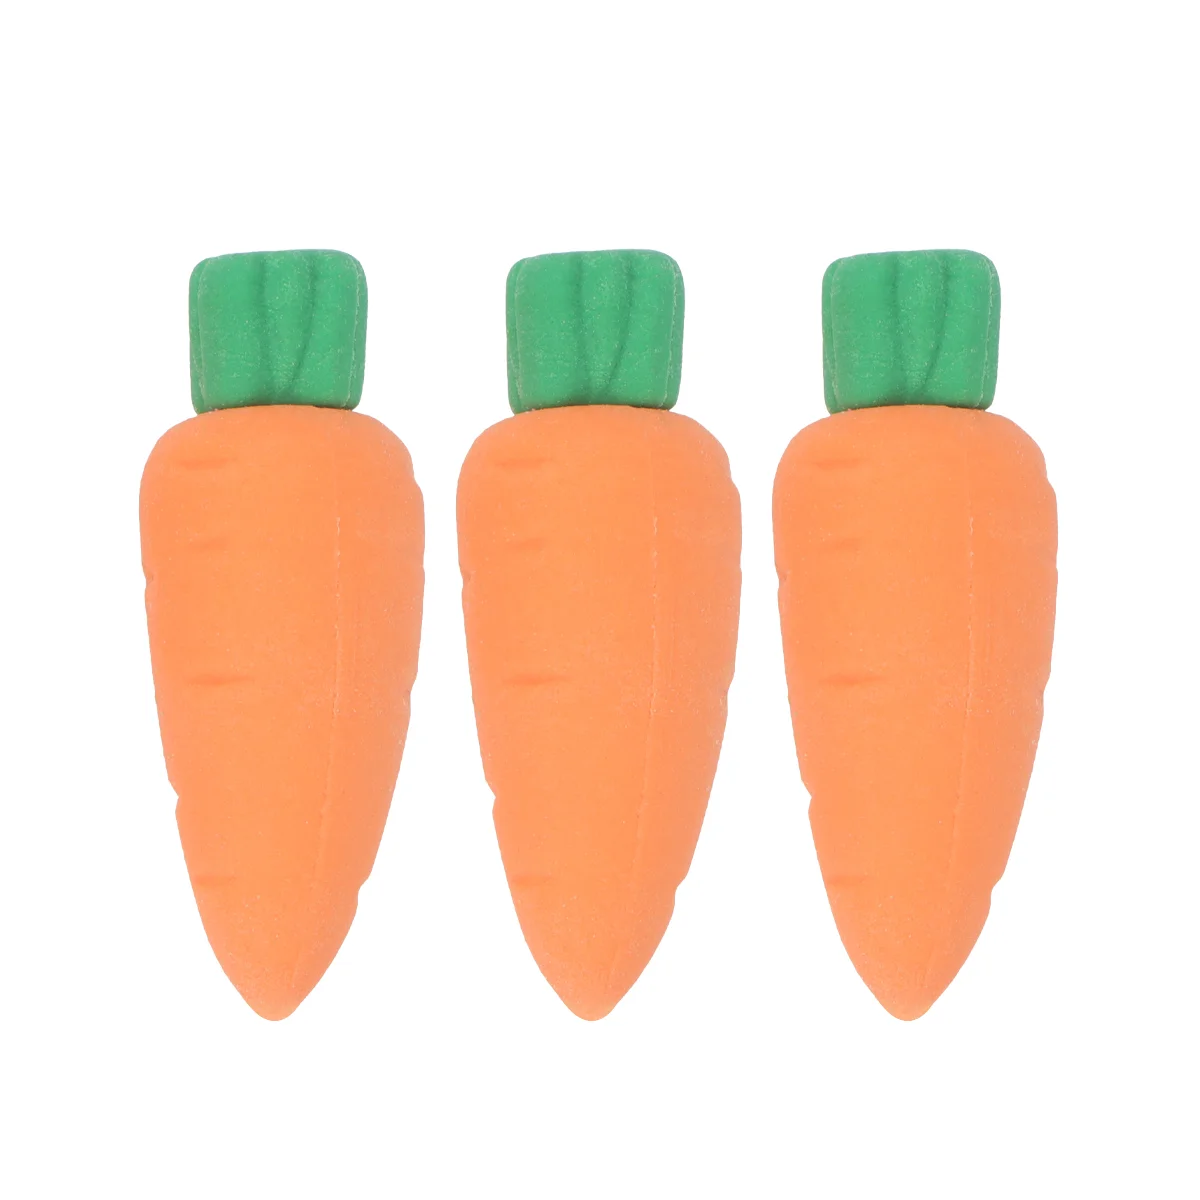 

30 Pcs Rubber Eraser Carrot Shape Creative Erasers for Kids Pencil Modeling Stationery